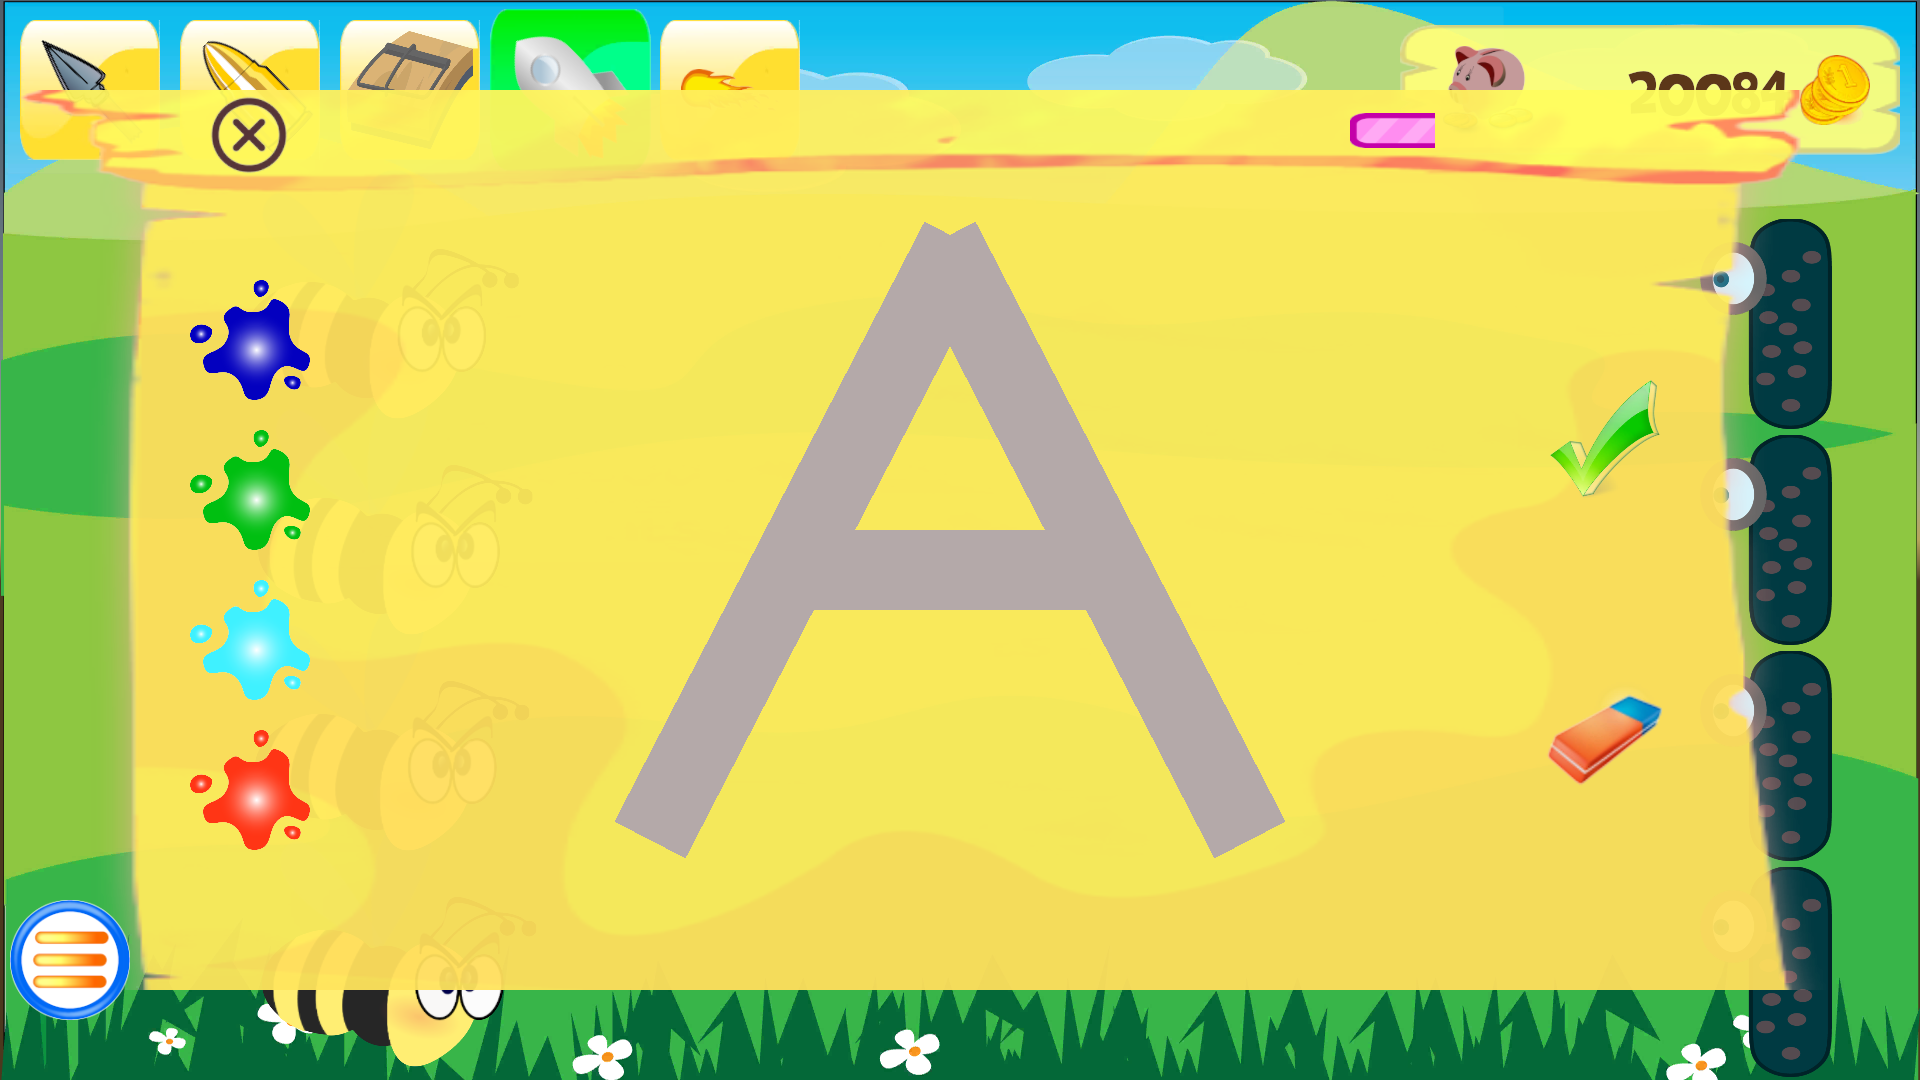 Screenshot 1 of Игра «Найди буквы» 4.6